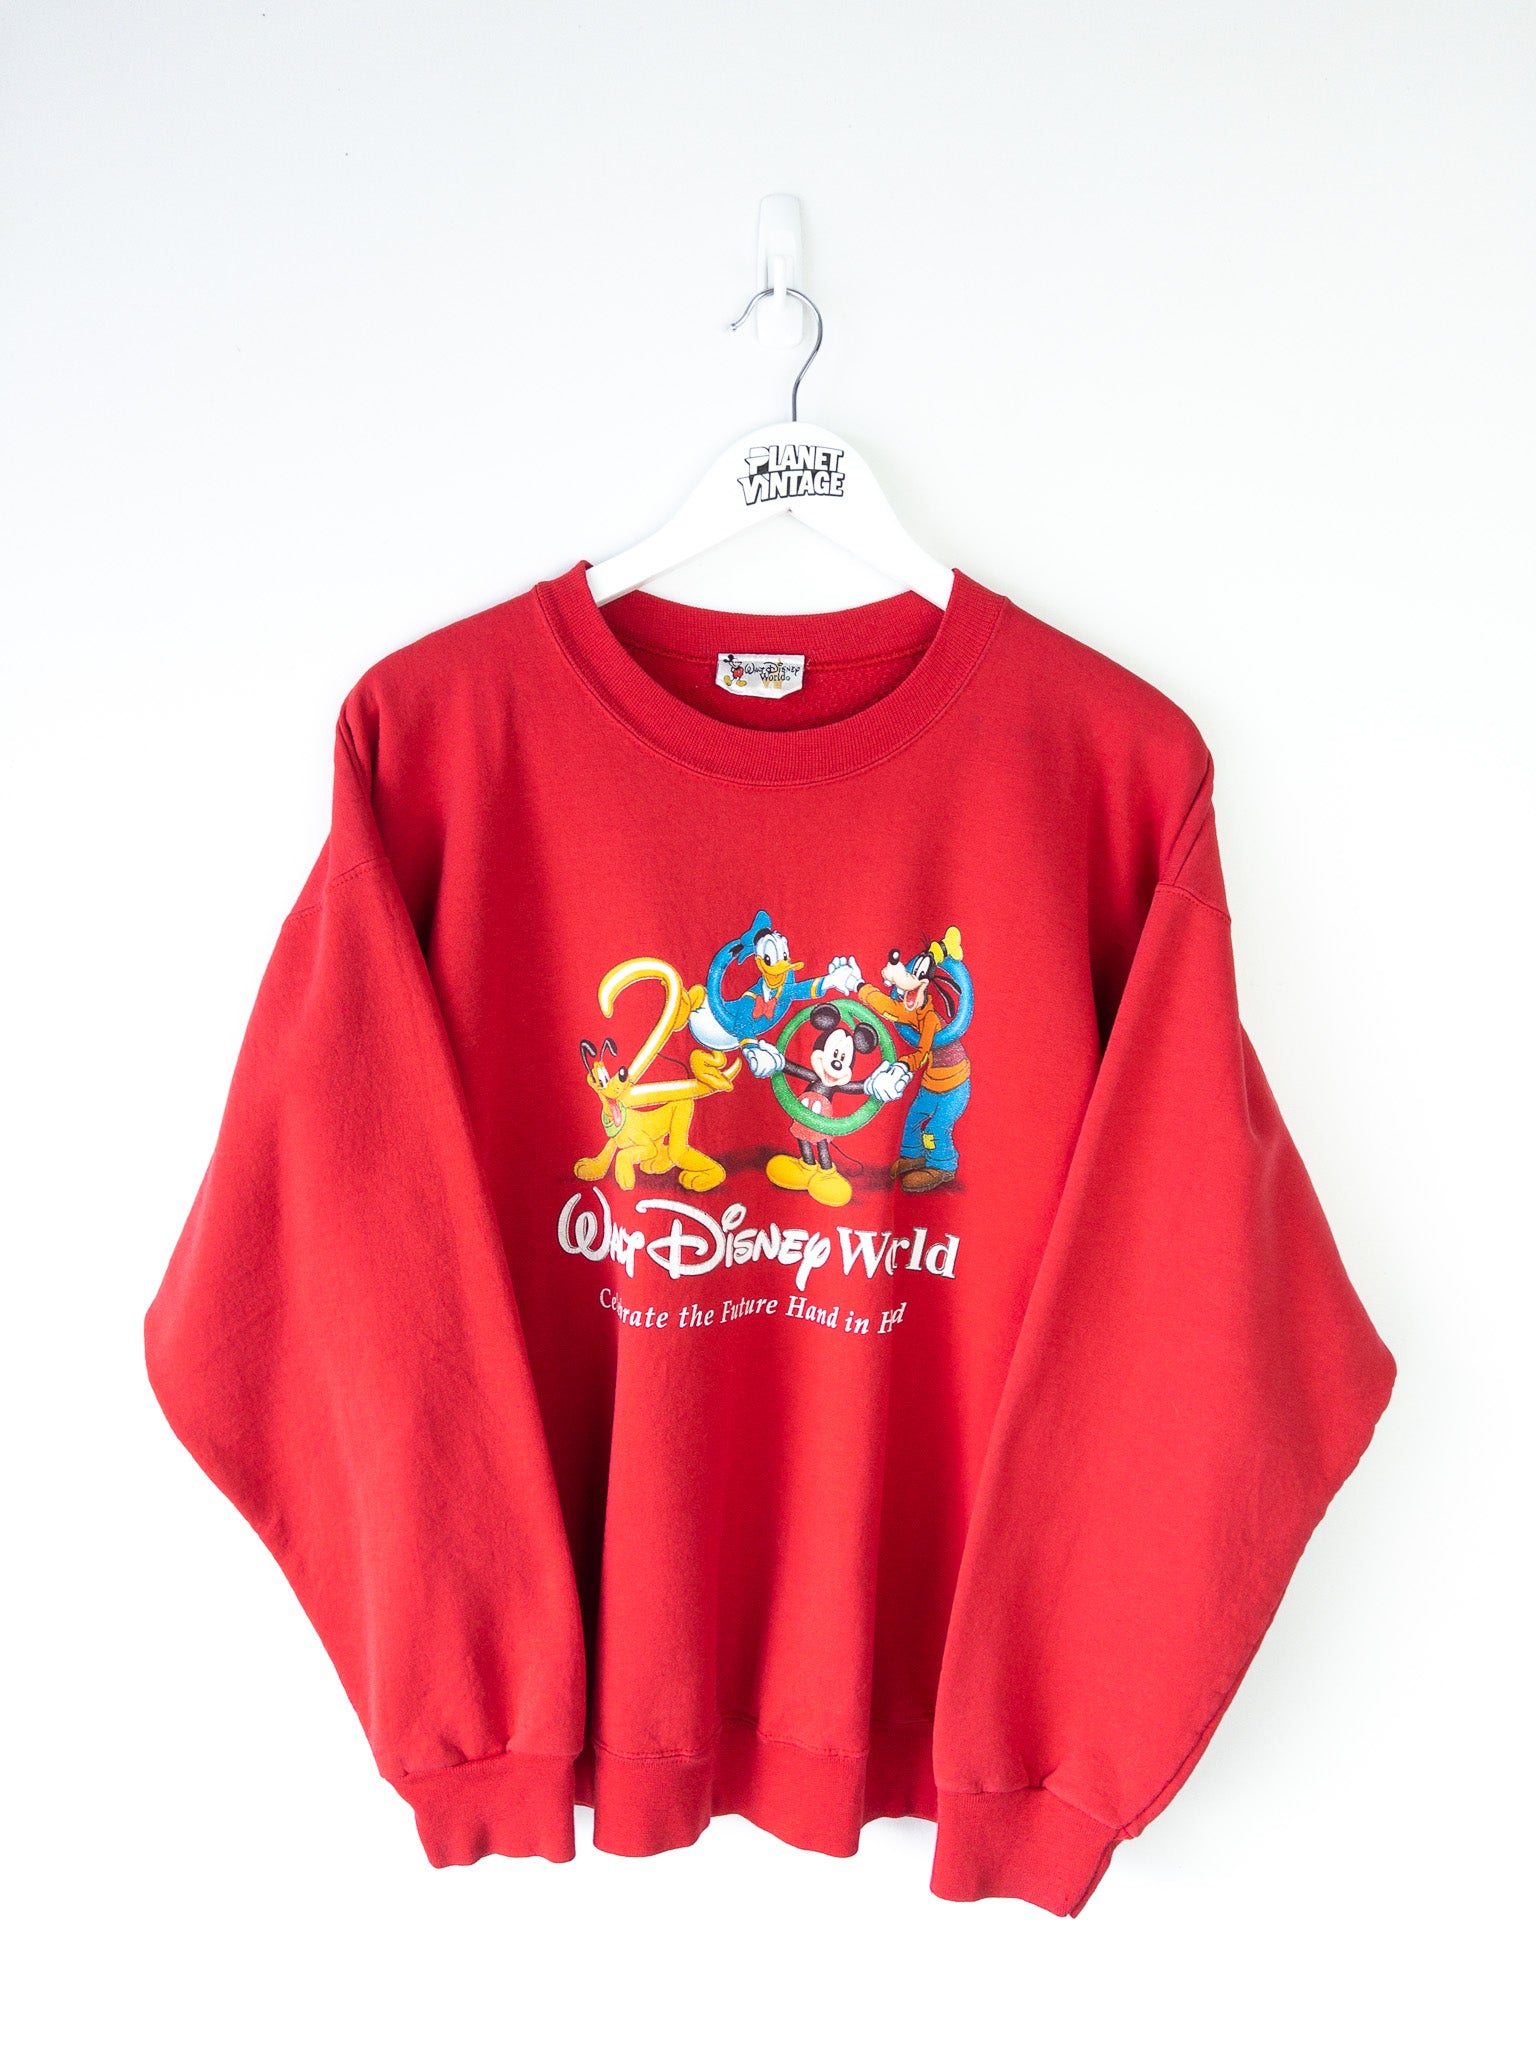 Vintage Walt Disney World 2000 Sweatshirt (L)